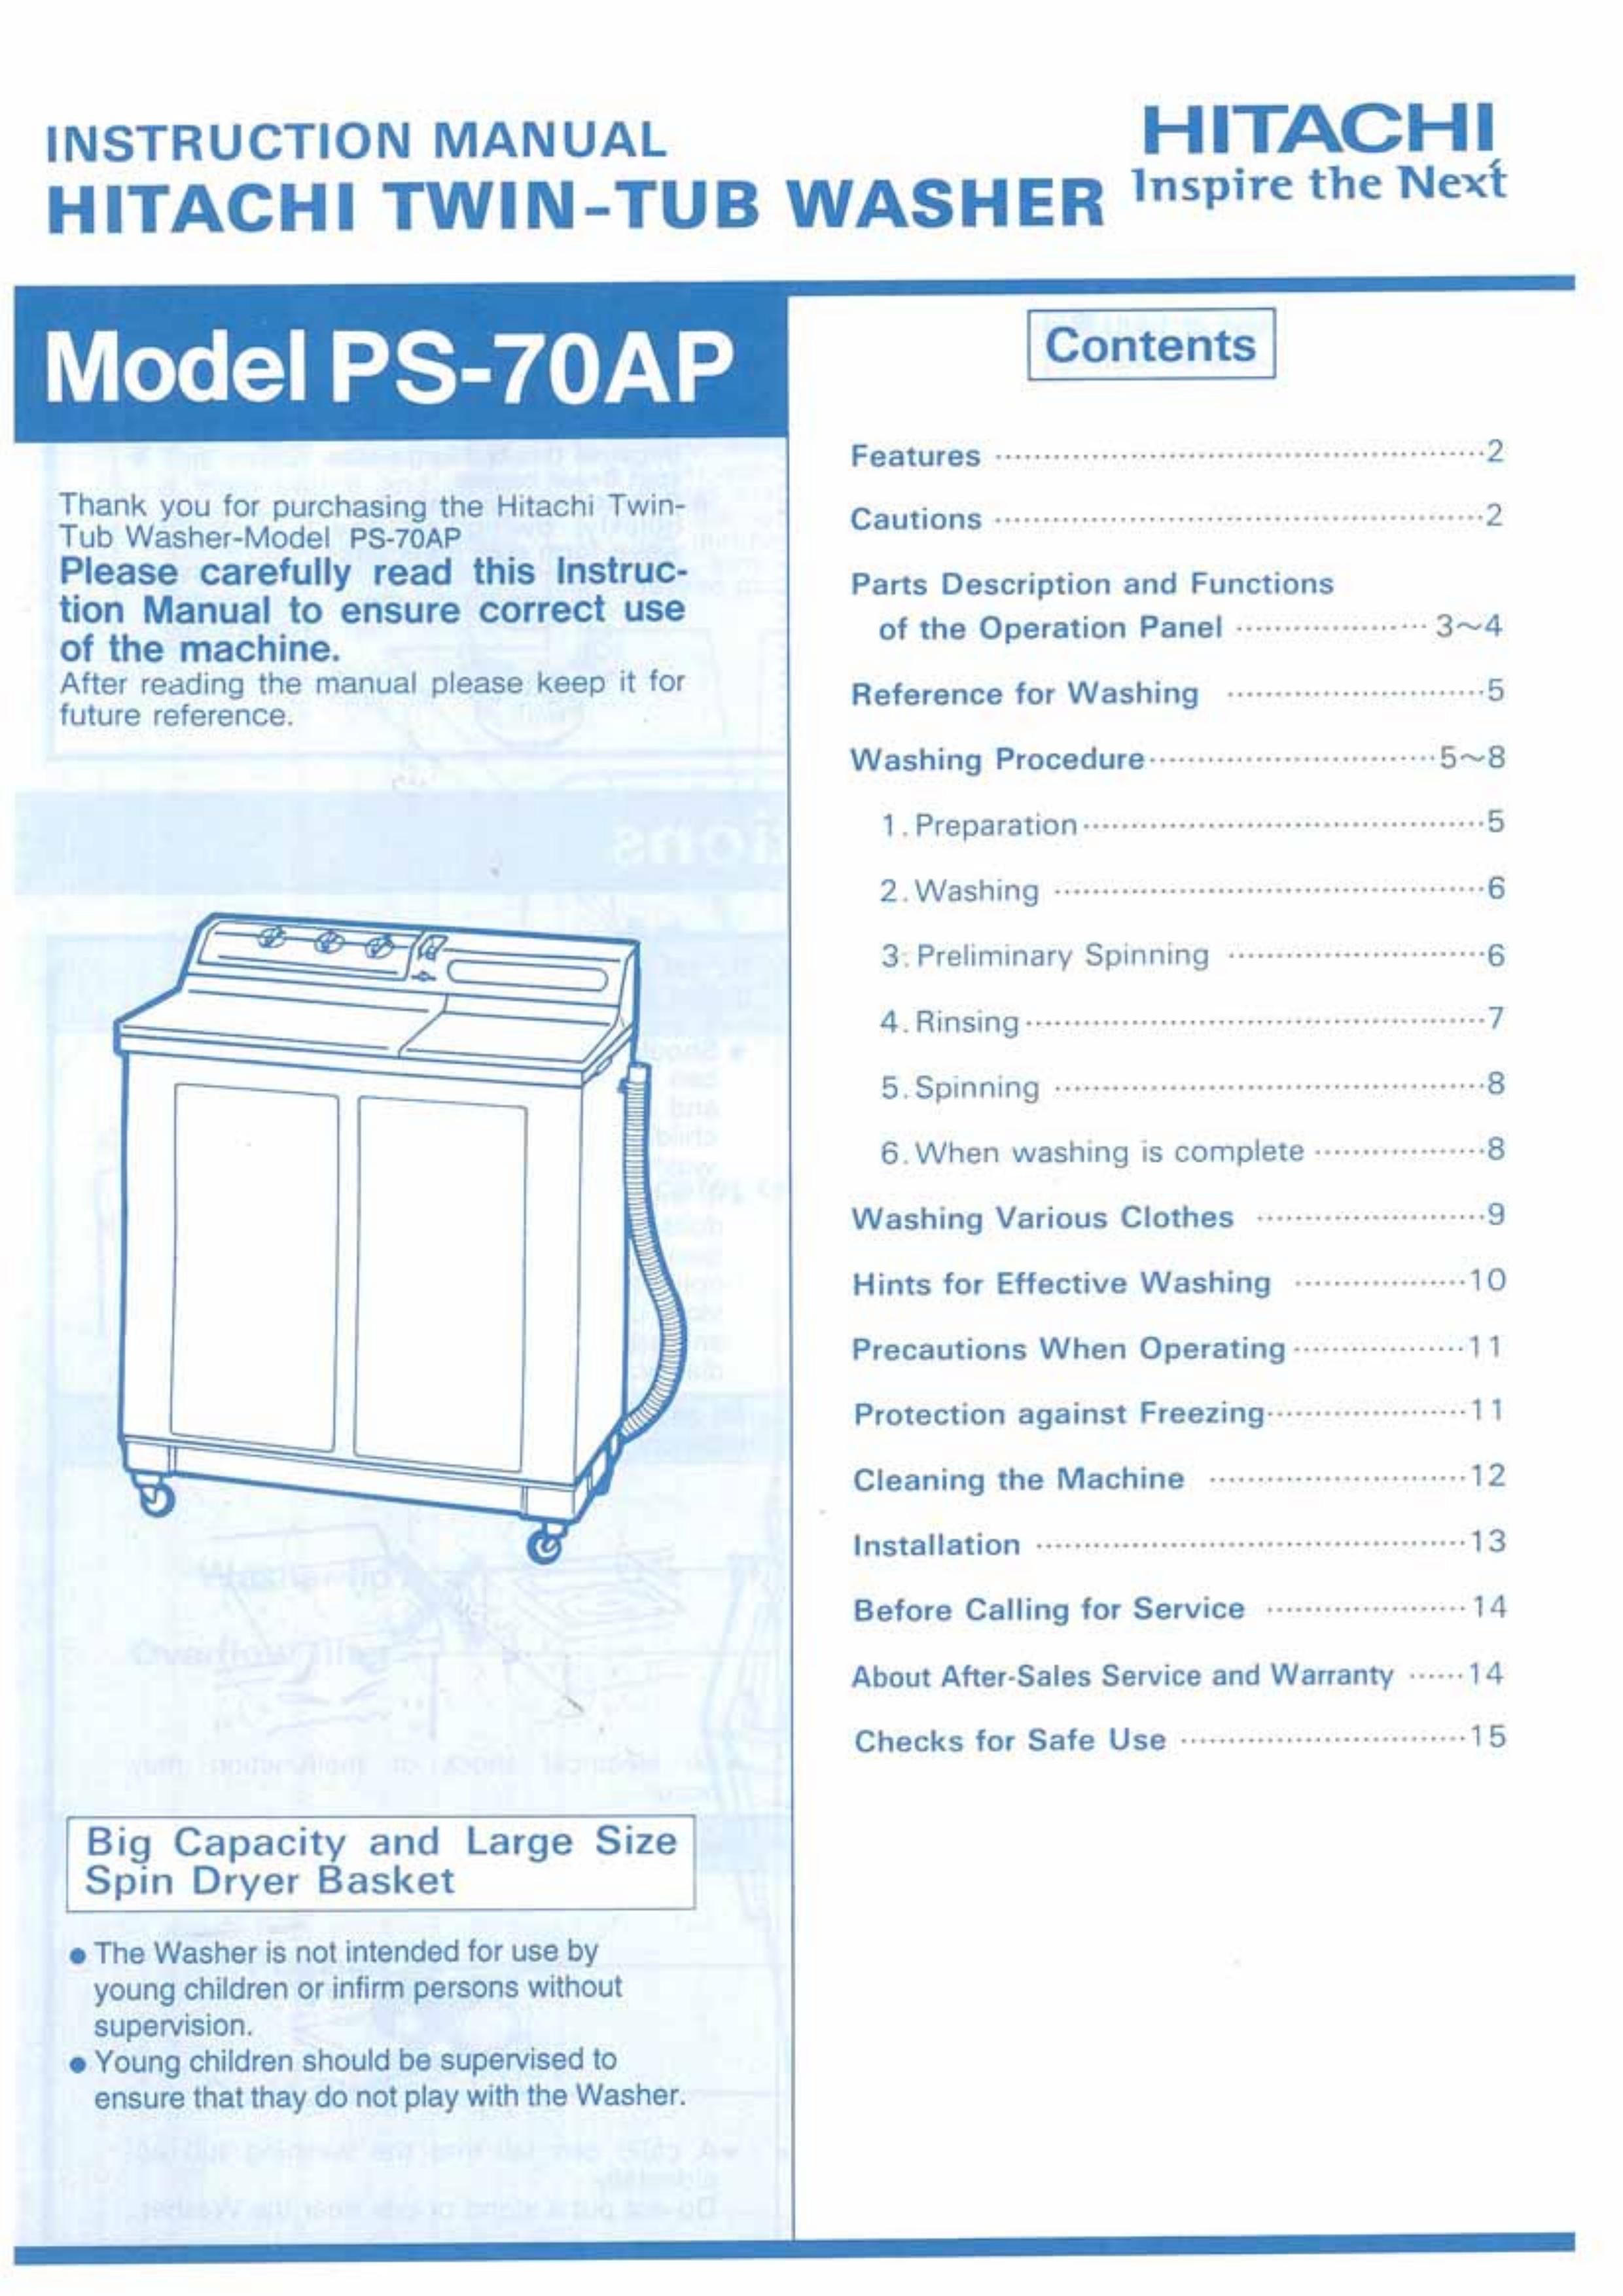 Hitachi PS-70AP Washer User Manual